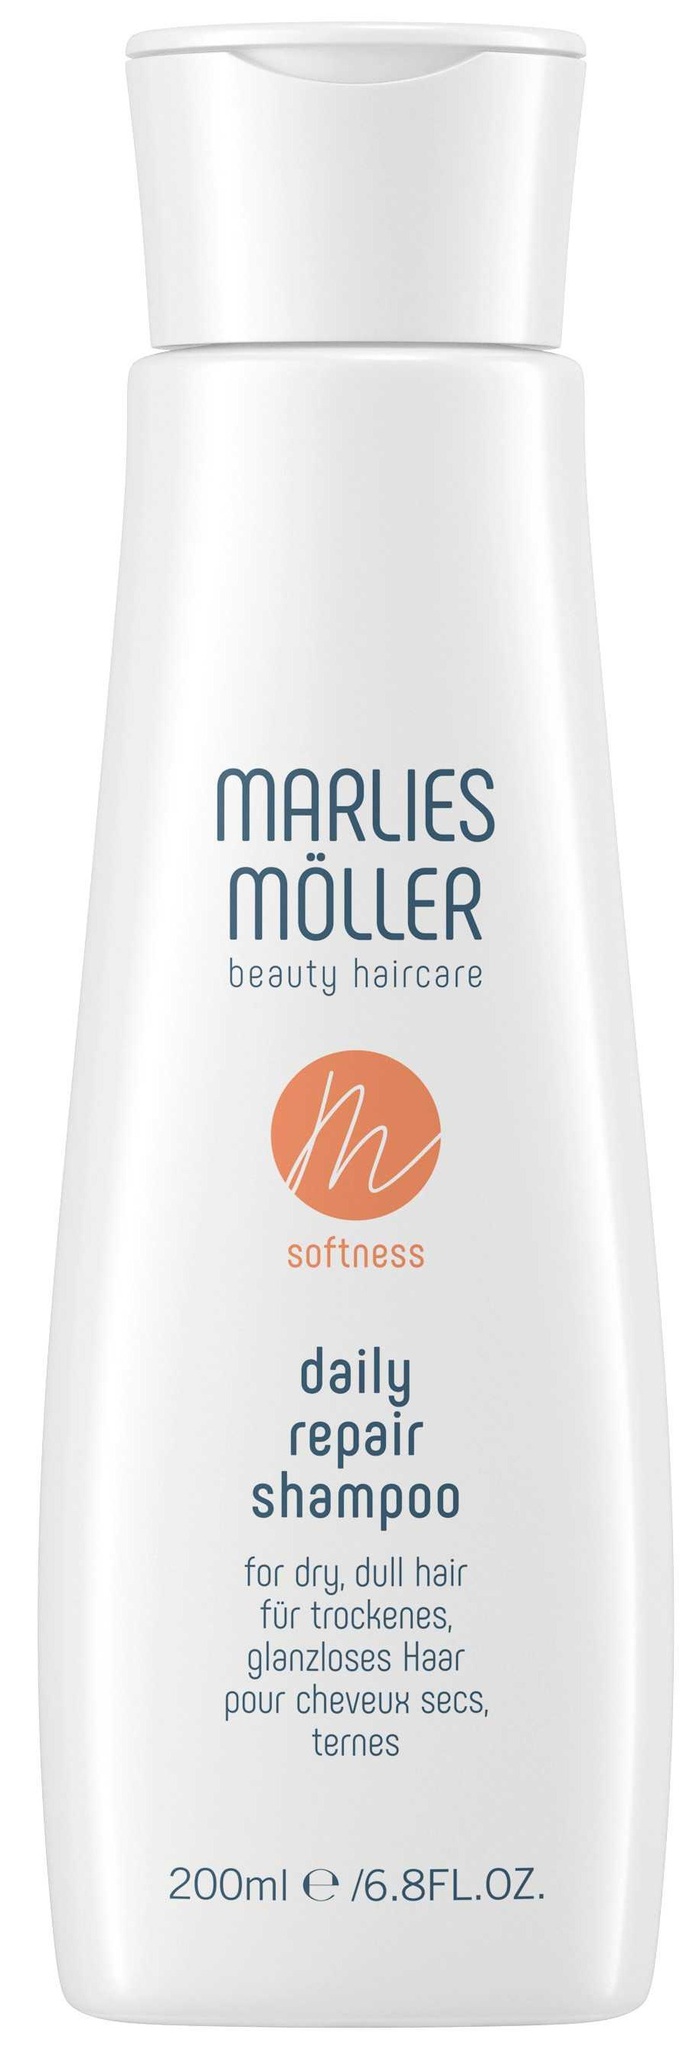 Marlies Möller Daily Repair Shampoo